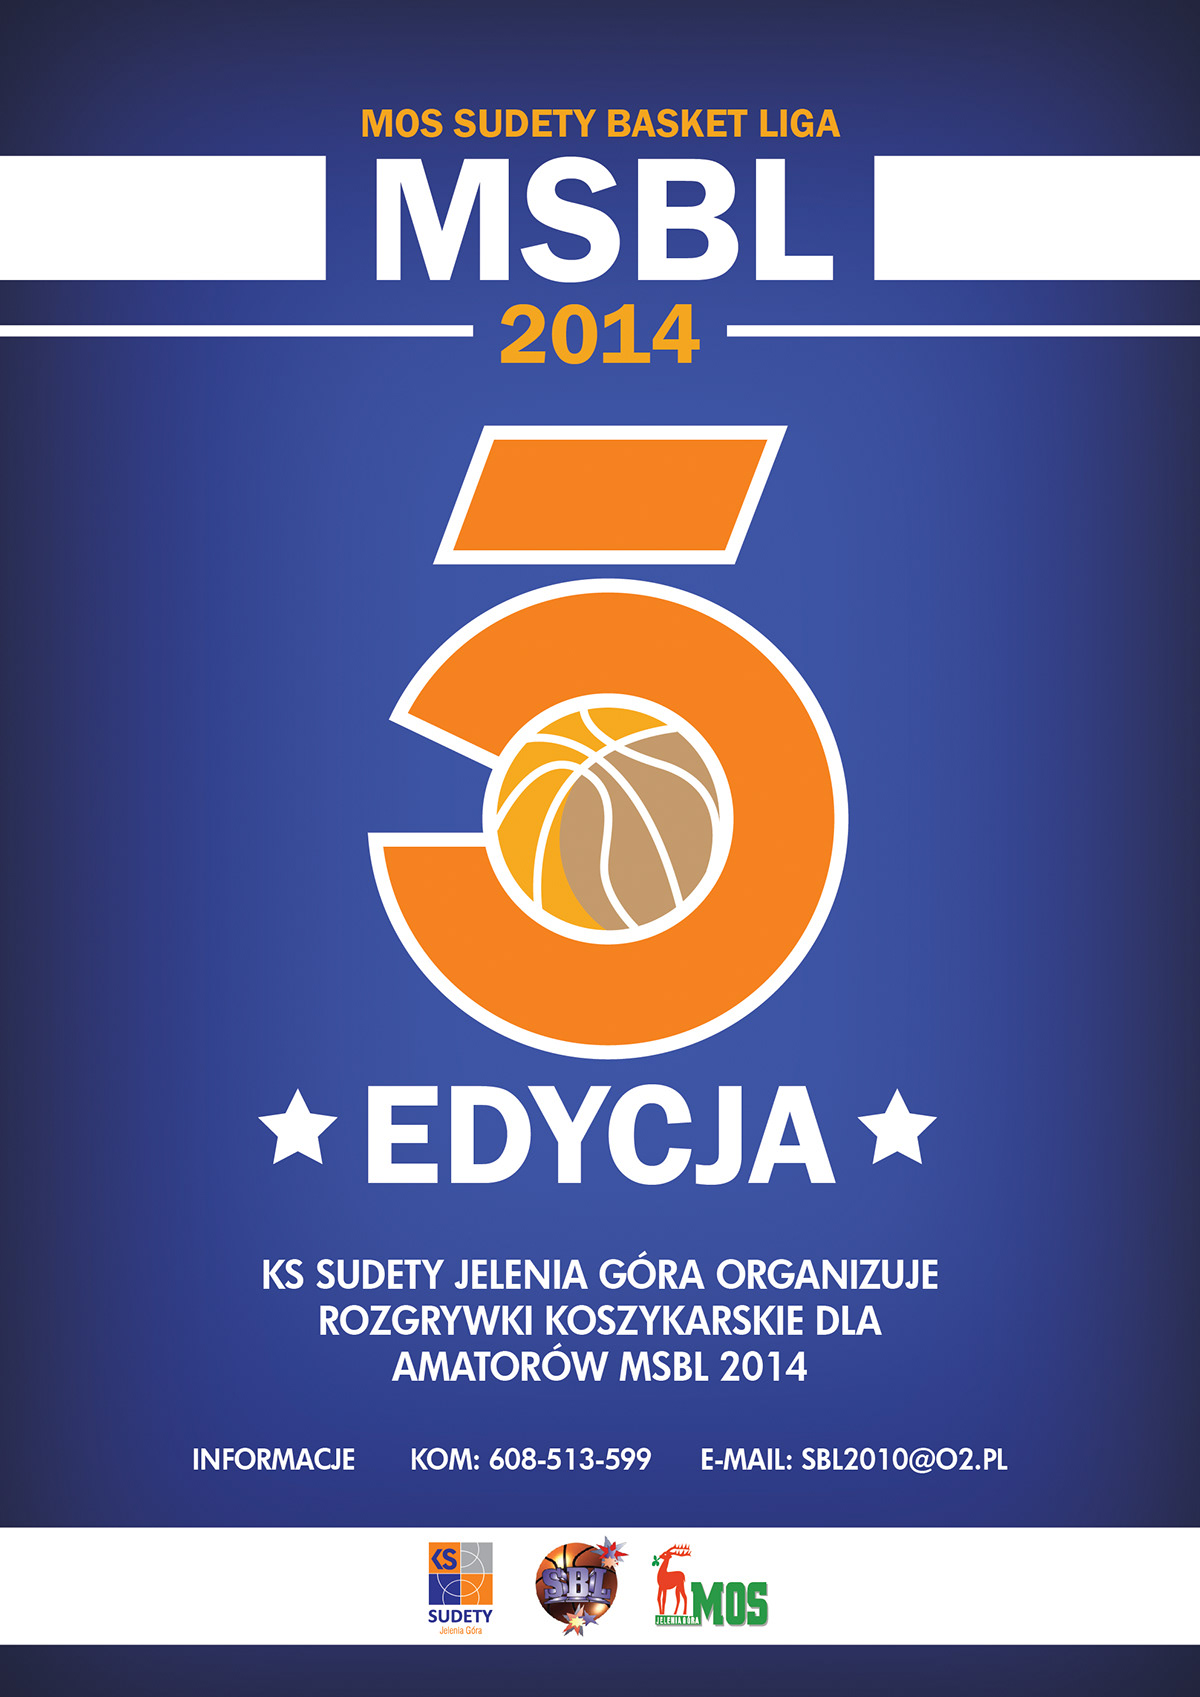 poster MSBL Sudety basket league NBA plk amateur plakat jelenia gora